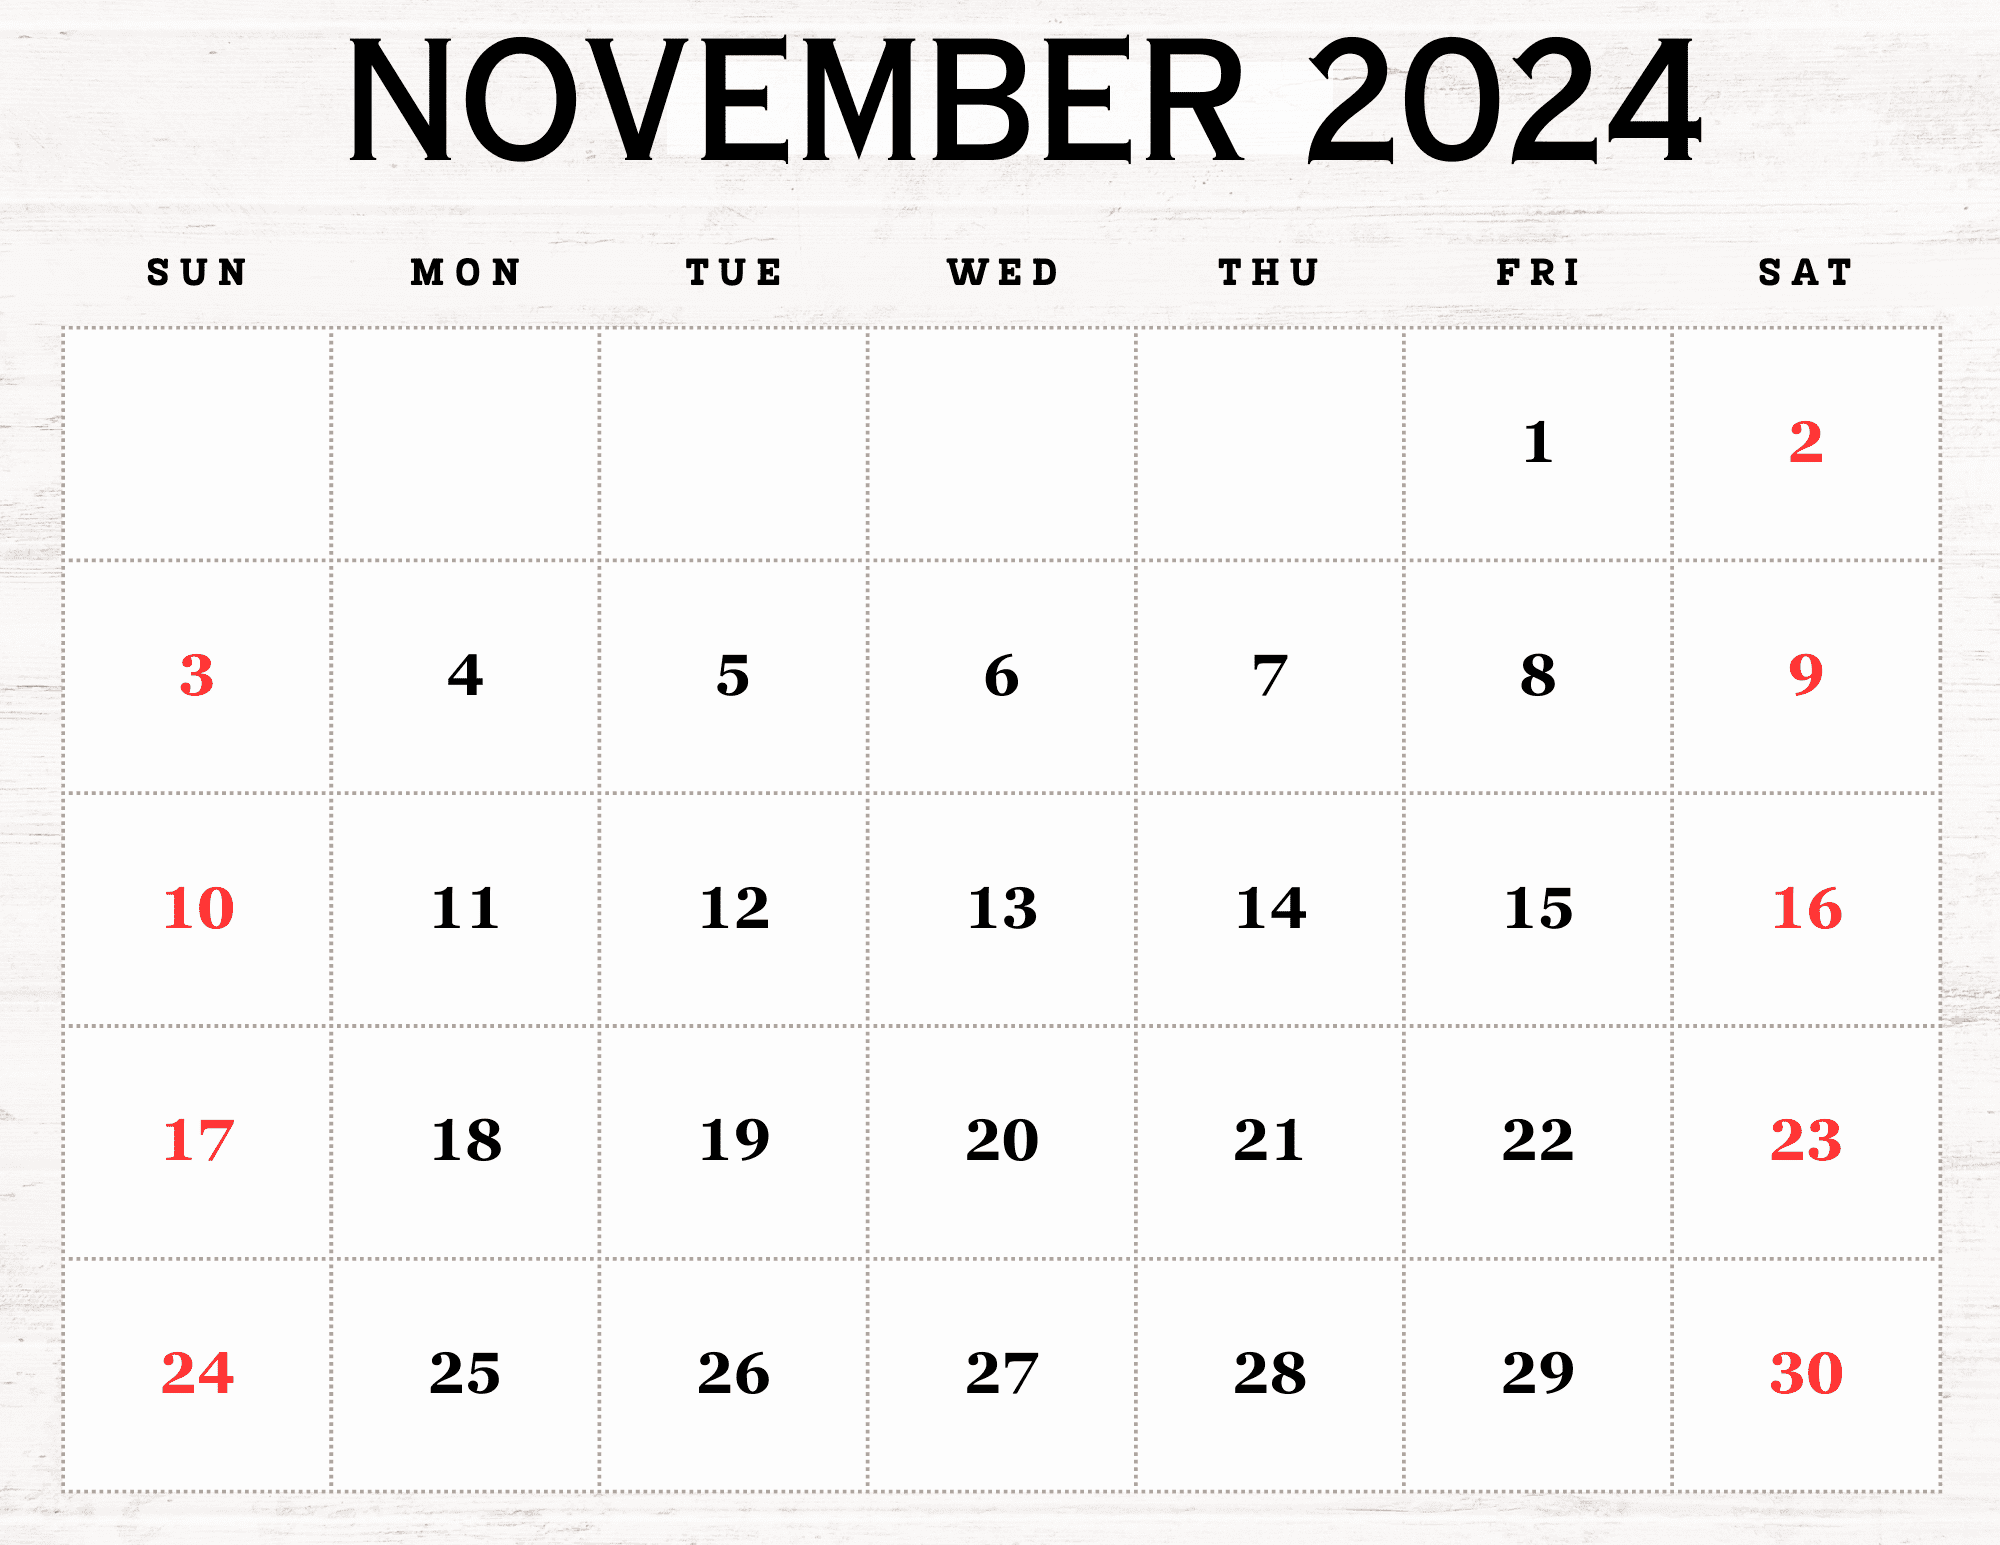 November 2024 Calendar Printable Pdf Template With Holidays in Free Printable Appointment Calendar November 2024 Calendar